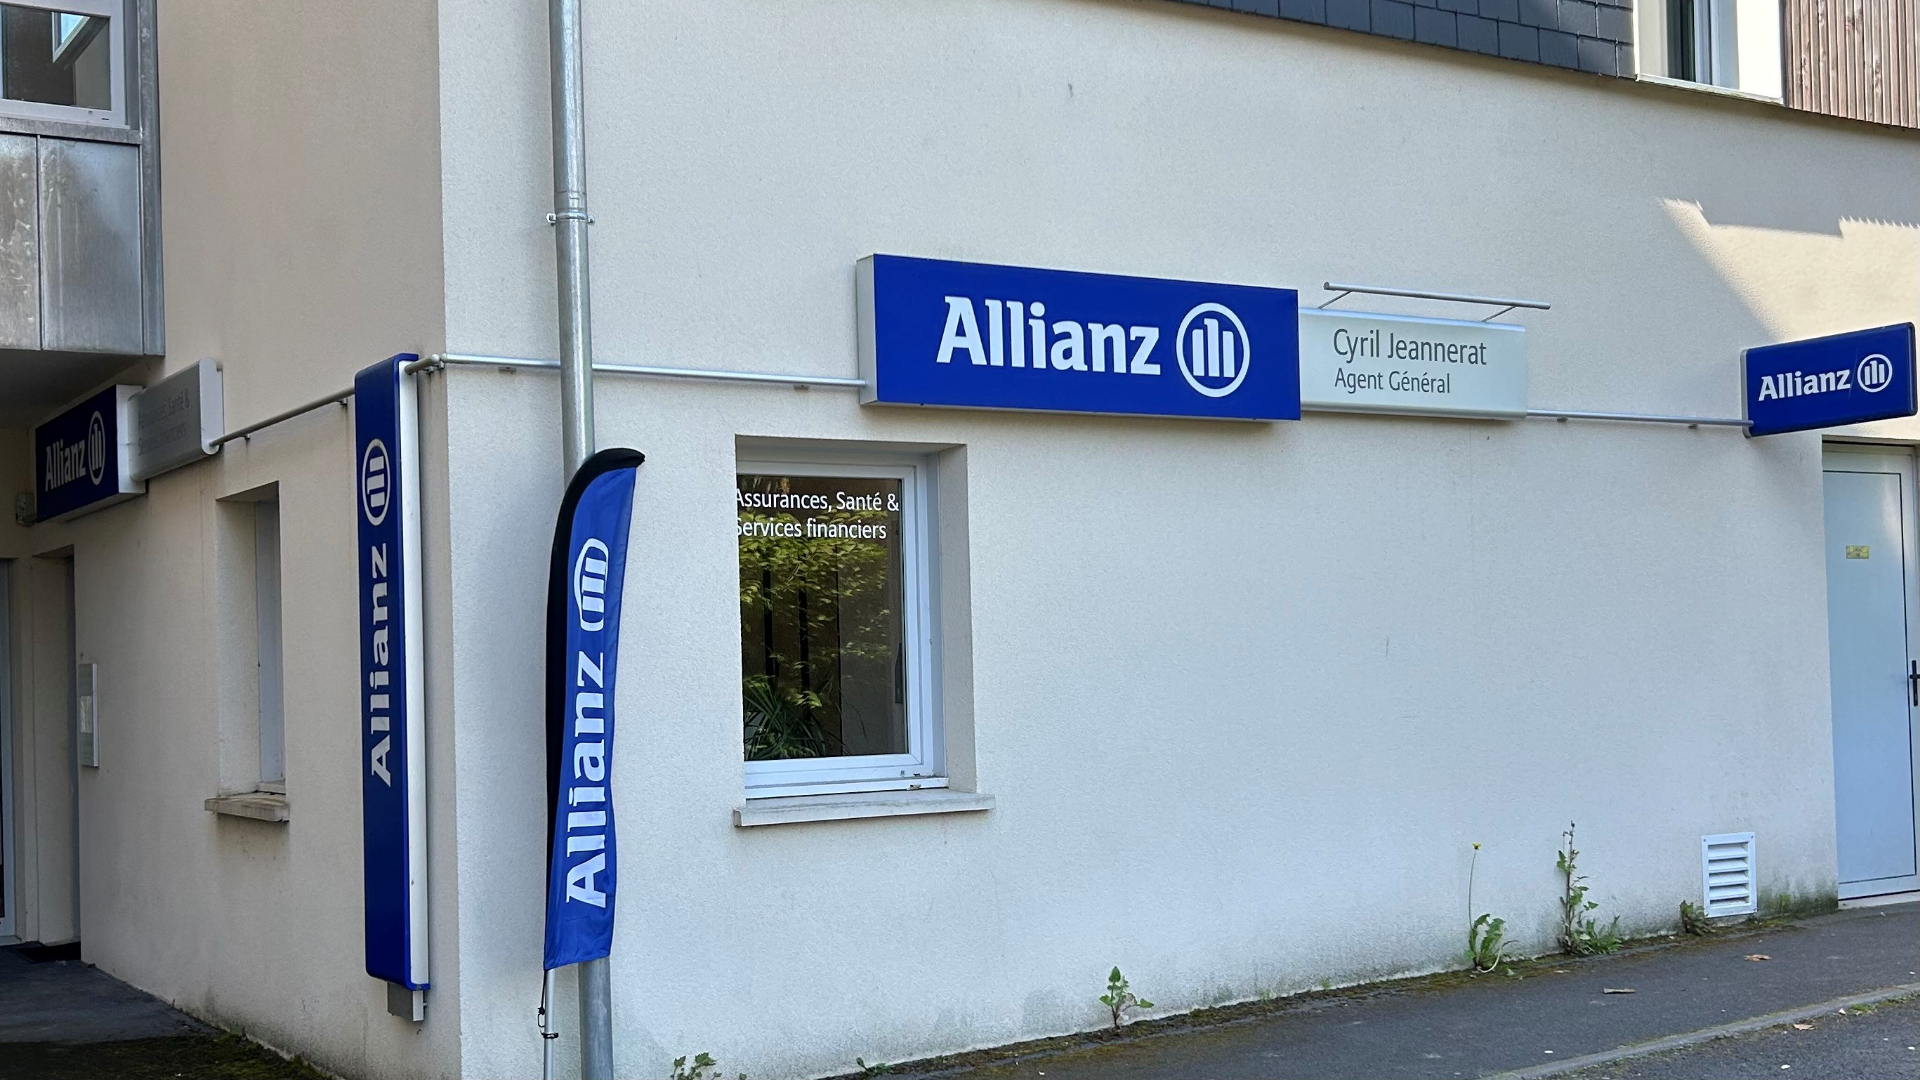 Allianz HONFLEUR - Cyril JEANNERAT